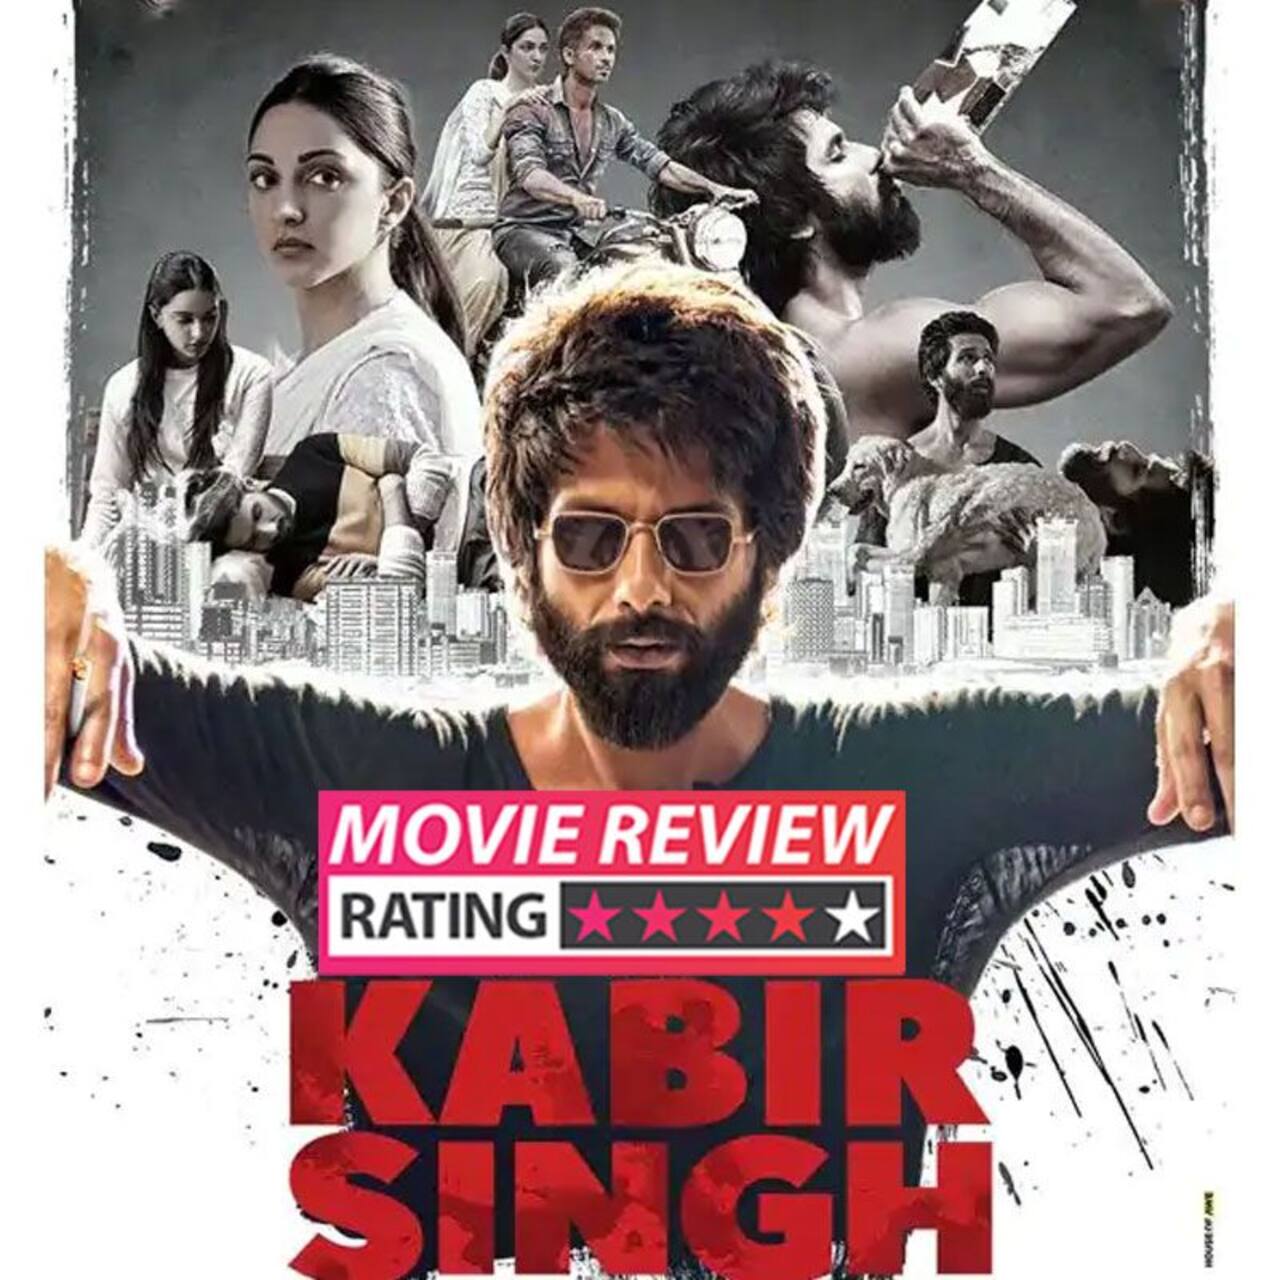 kabir singh movie review in english